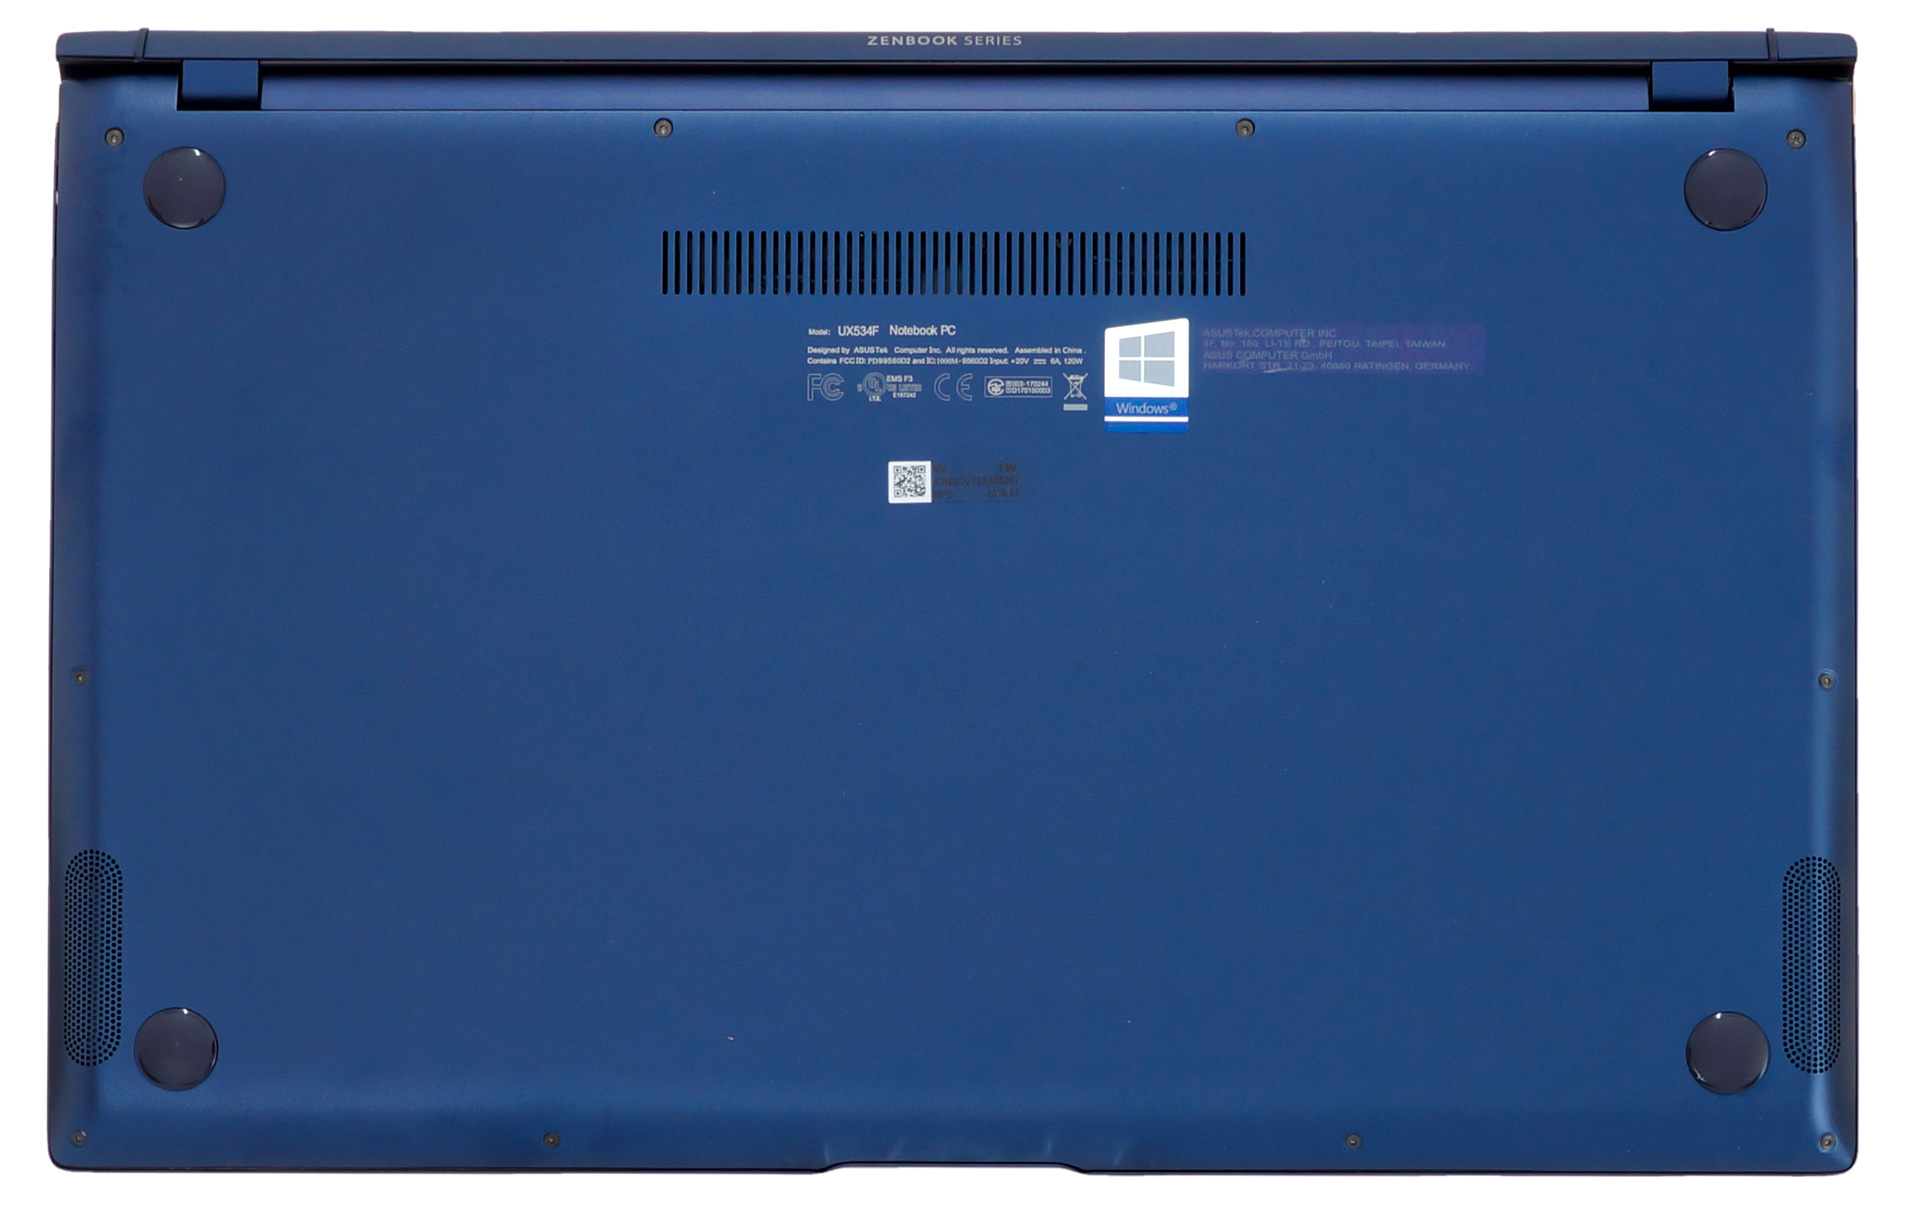 Asus ZenBook 15 UX534 review (UX534FTC - Core i7, GTX 1650, 4K or FHD  screen)